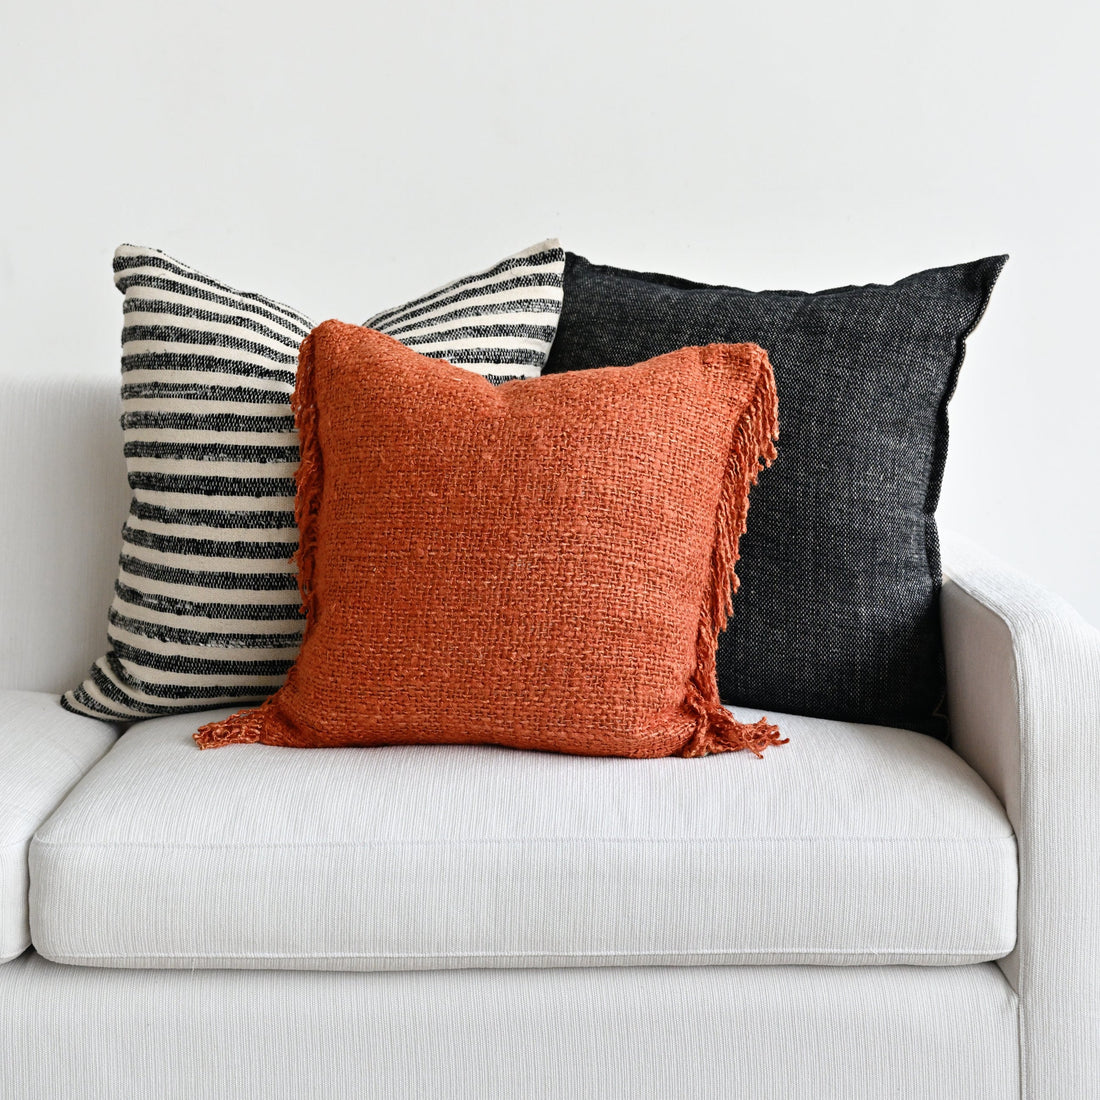 Ahaan Burnt Orange Cushion Cover - 45cm x 45cm